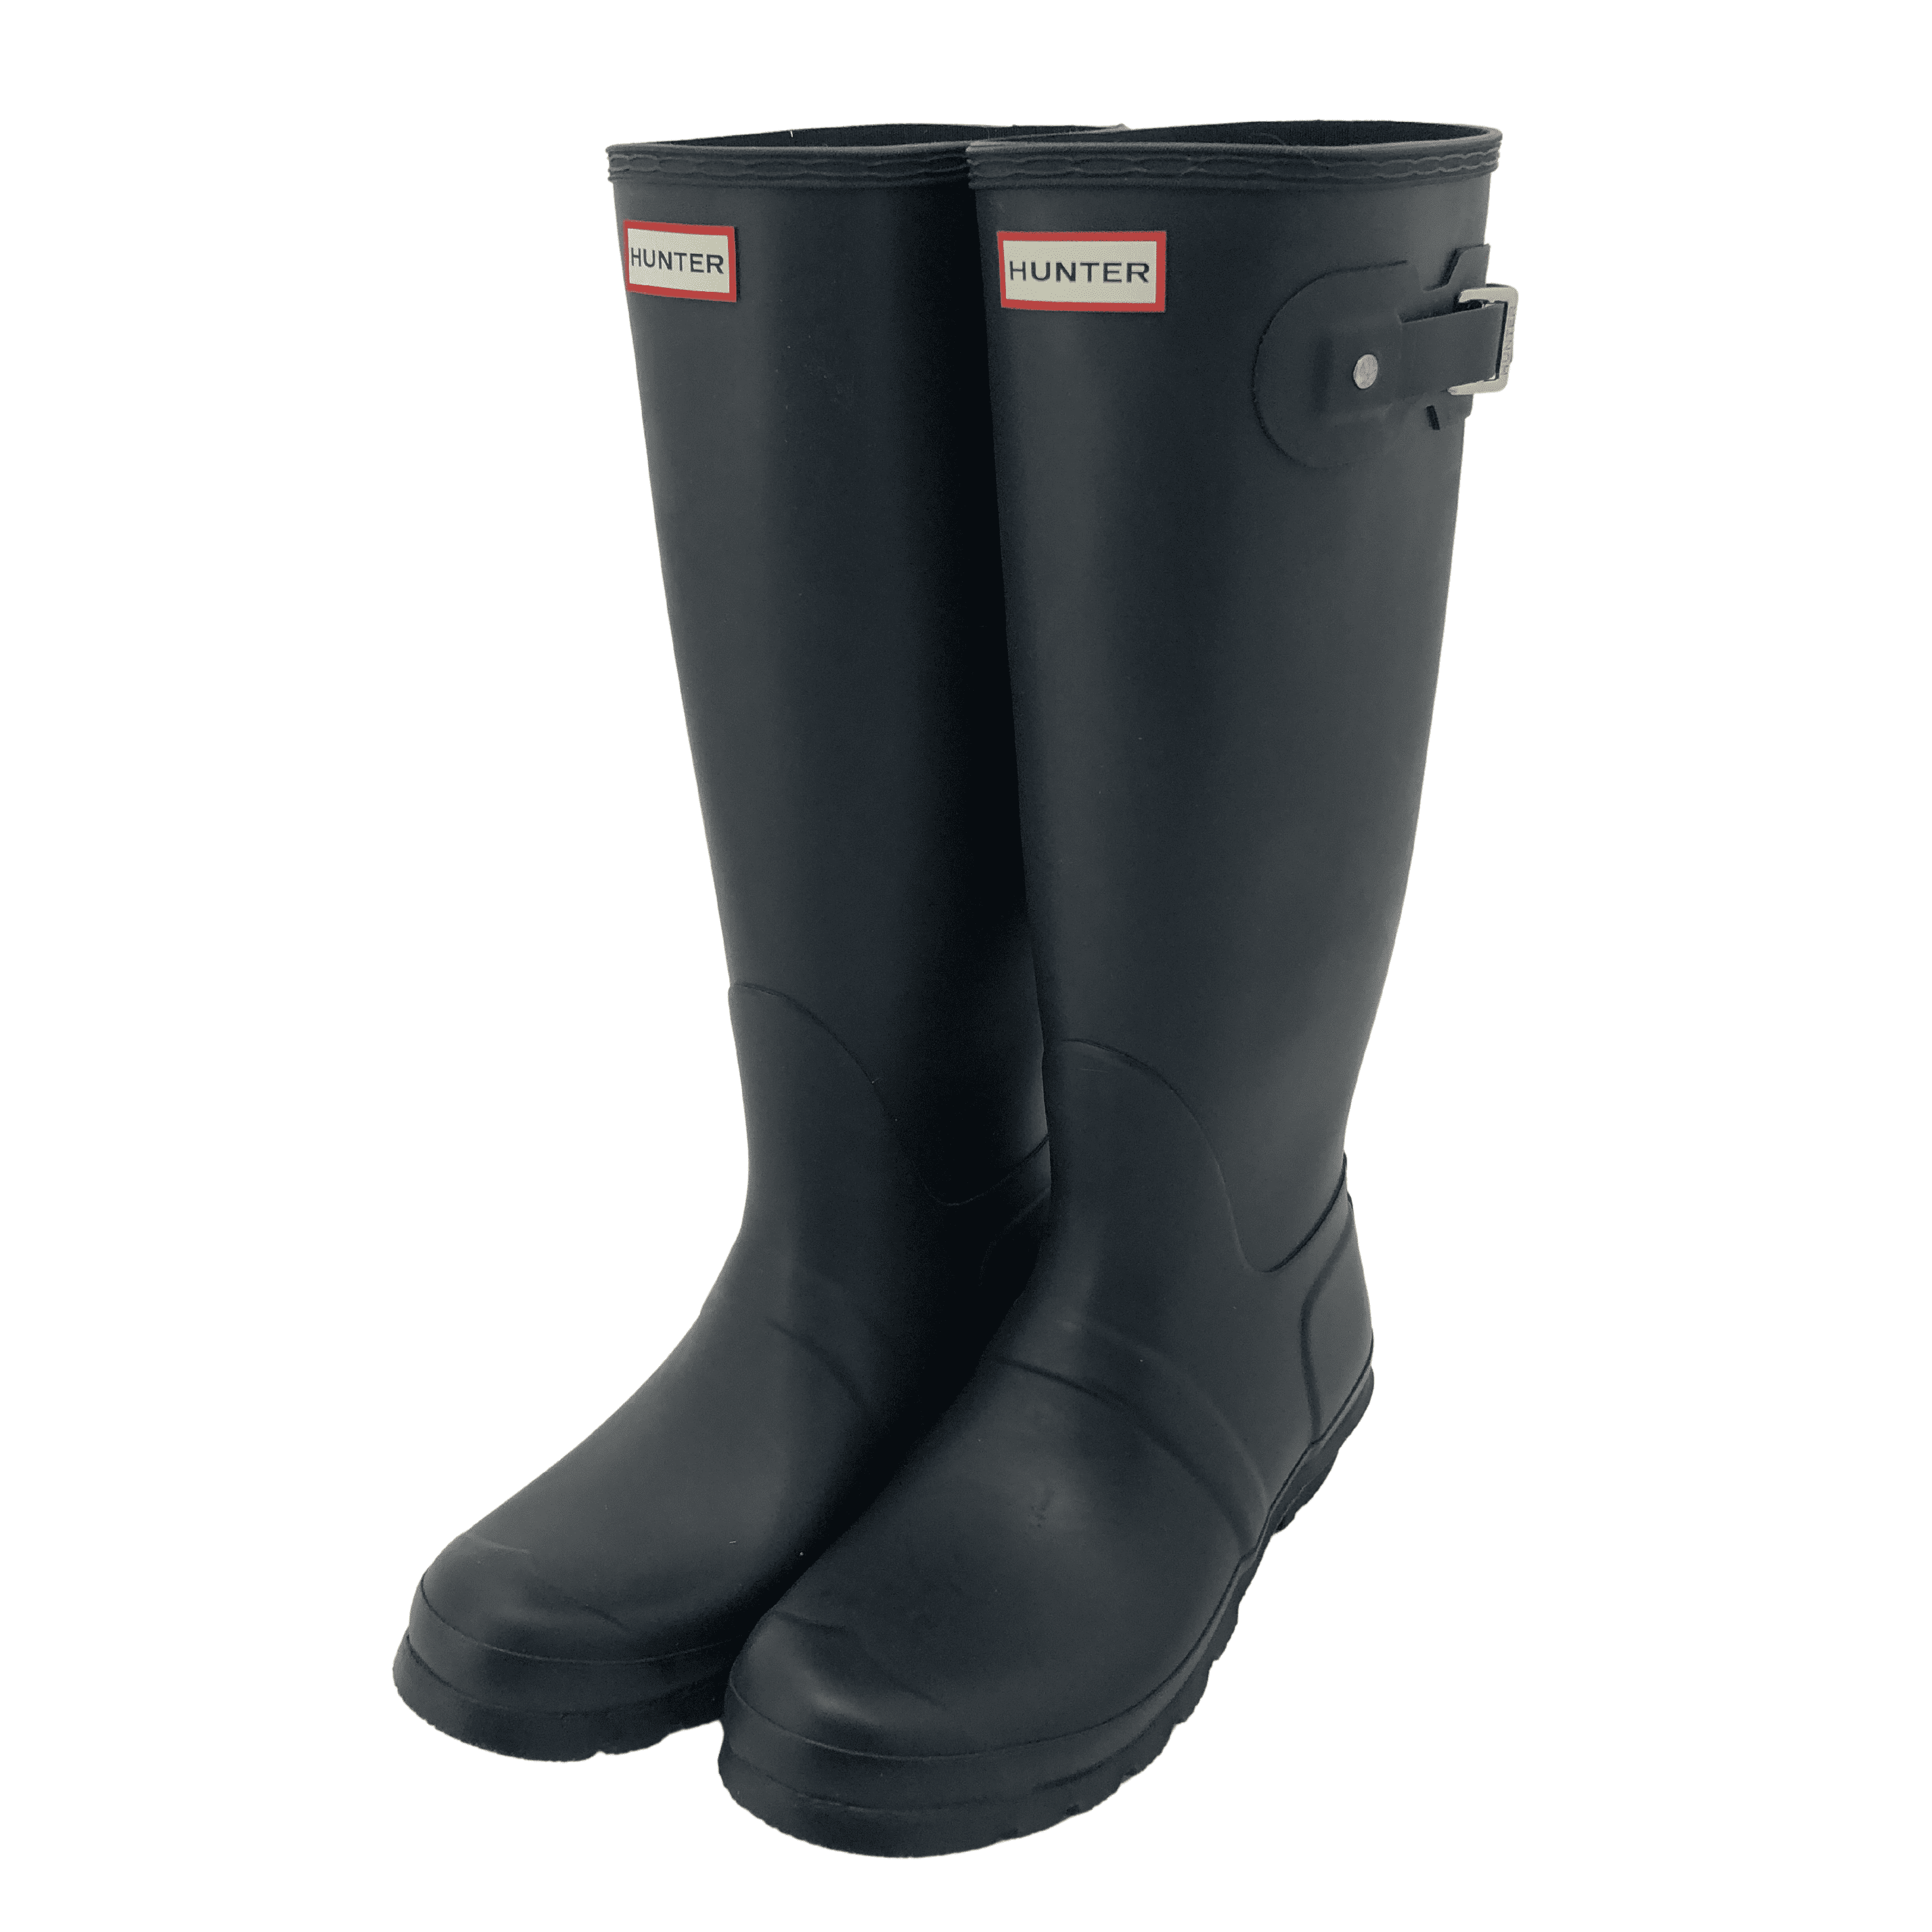 Hunter Women's Rain Boots / Original Tall Style / Navy Blue / Various Sizes